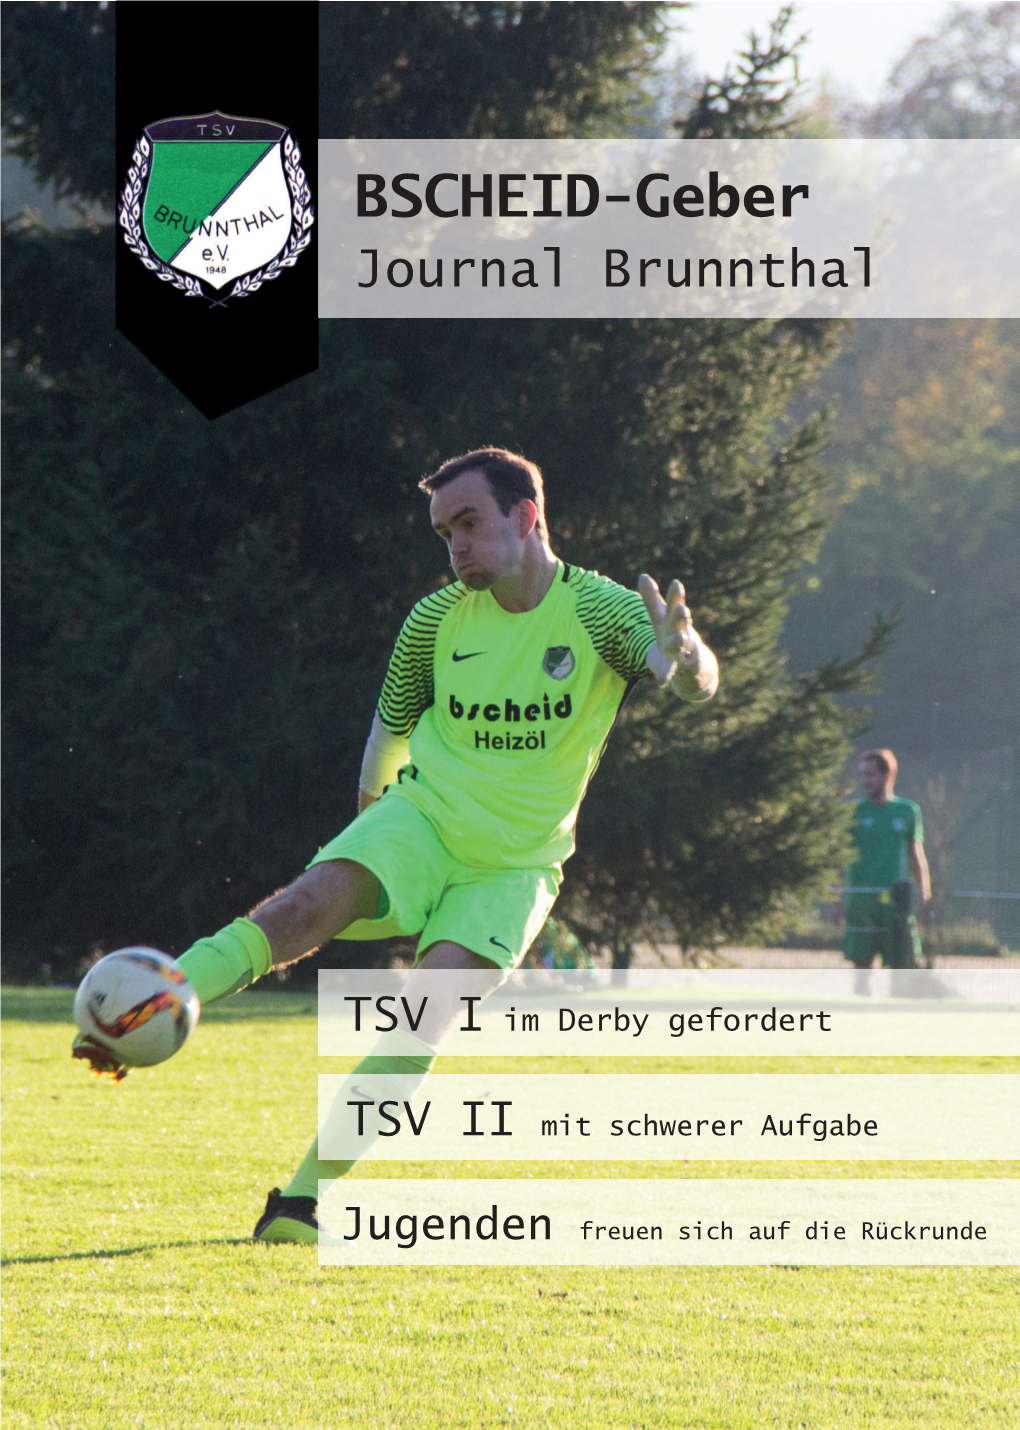 BSCHEID-Geber Journal Brunnthal